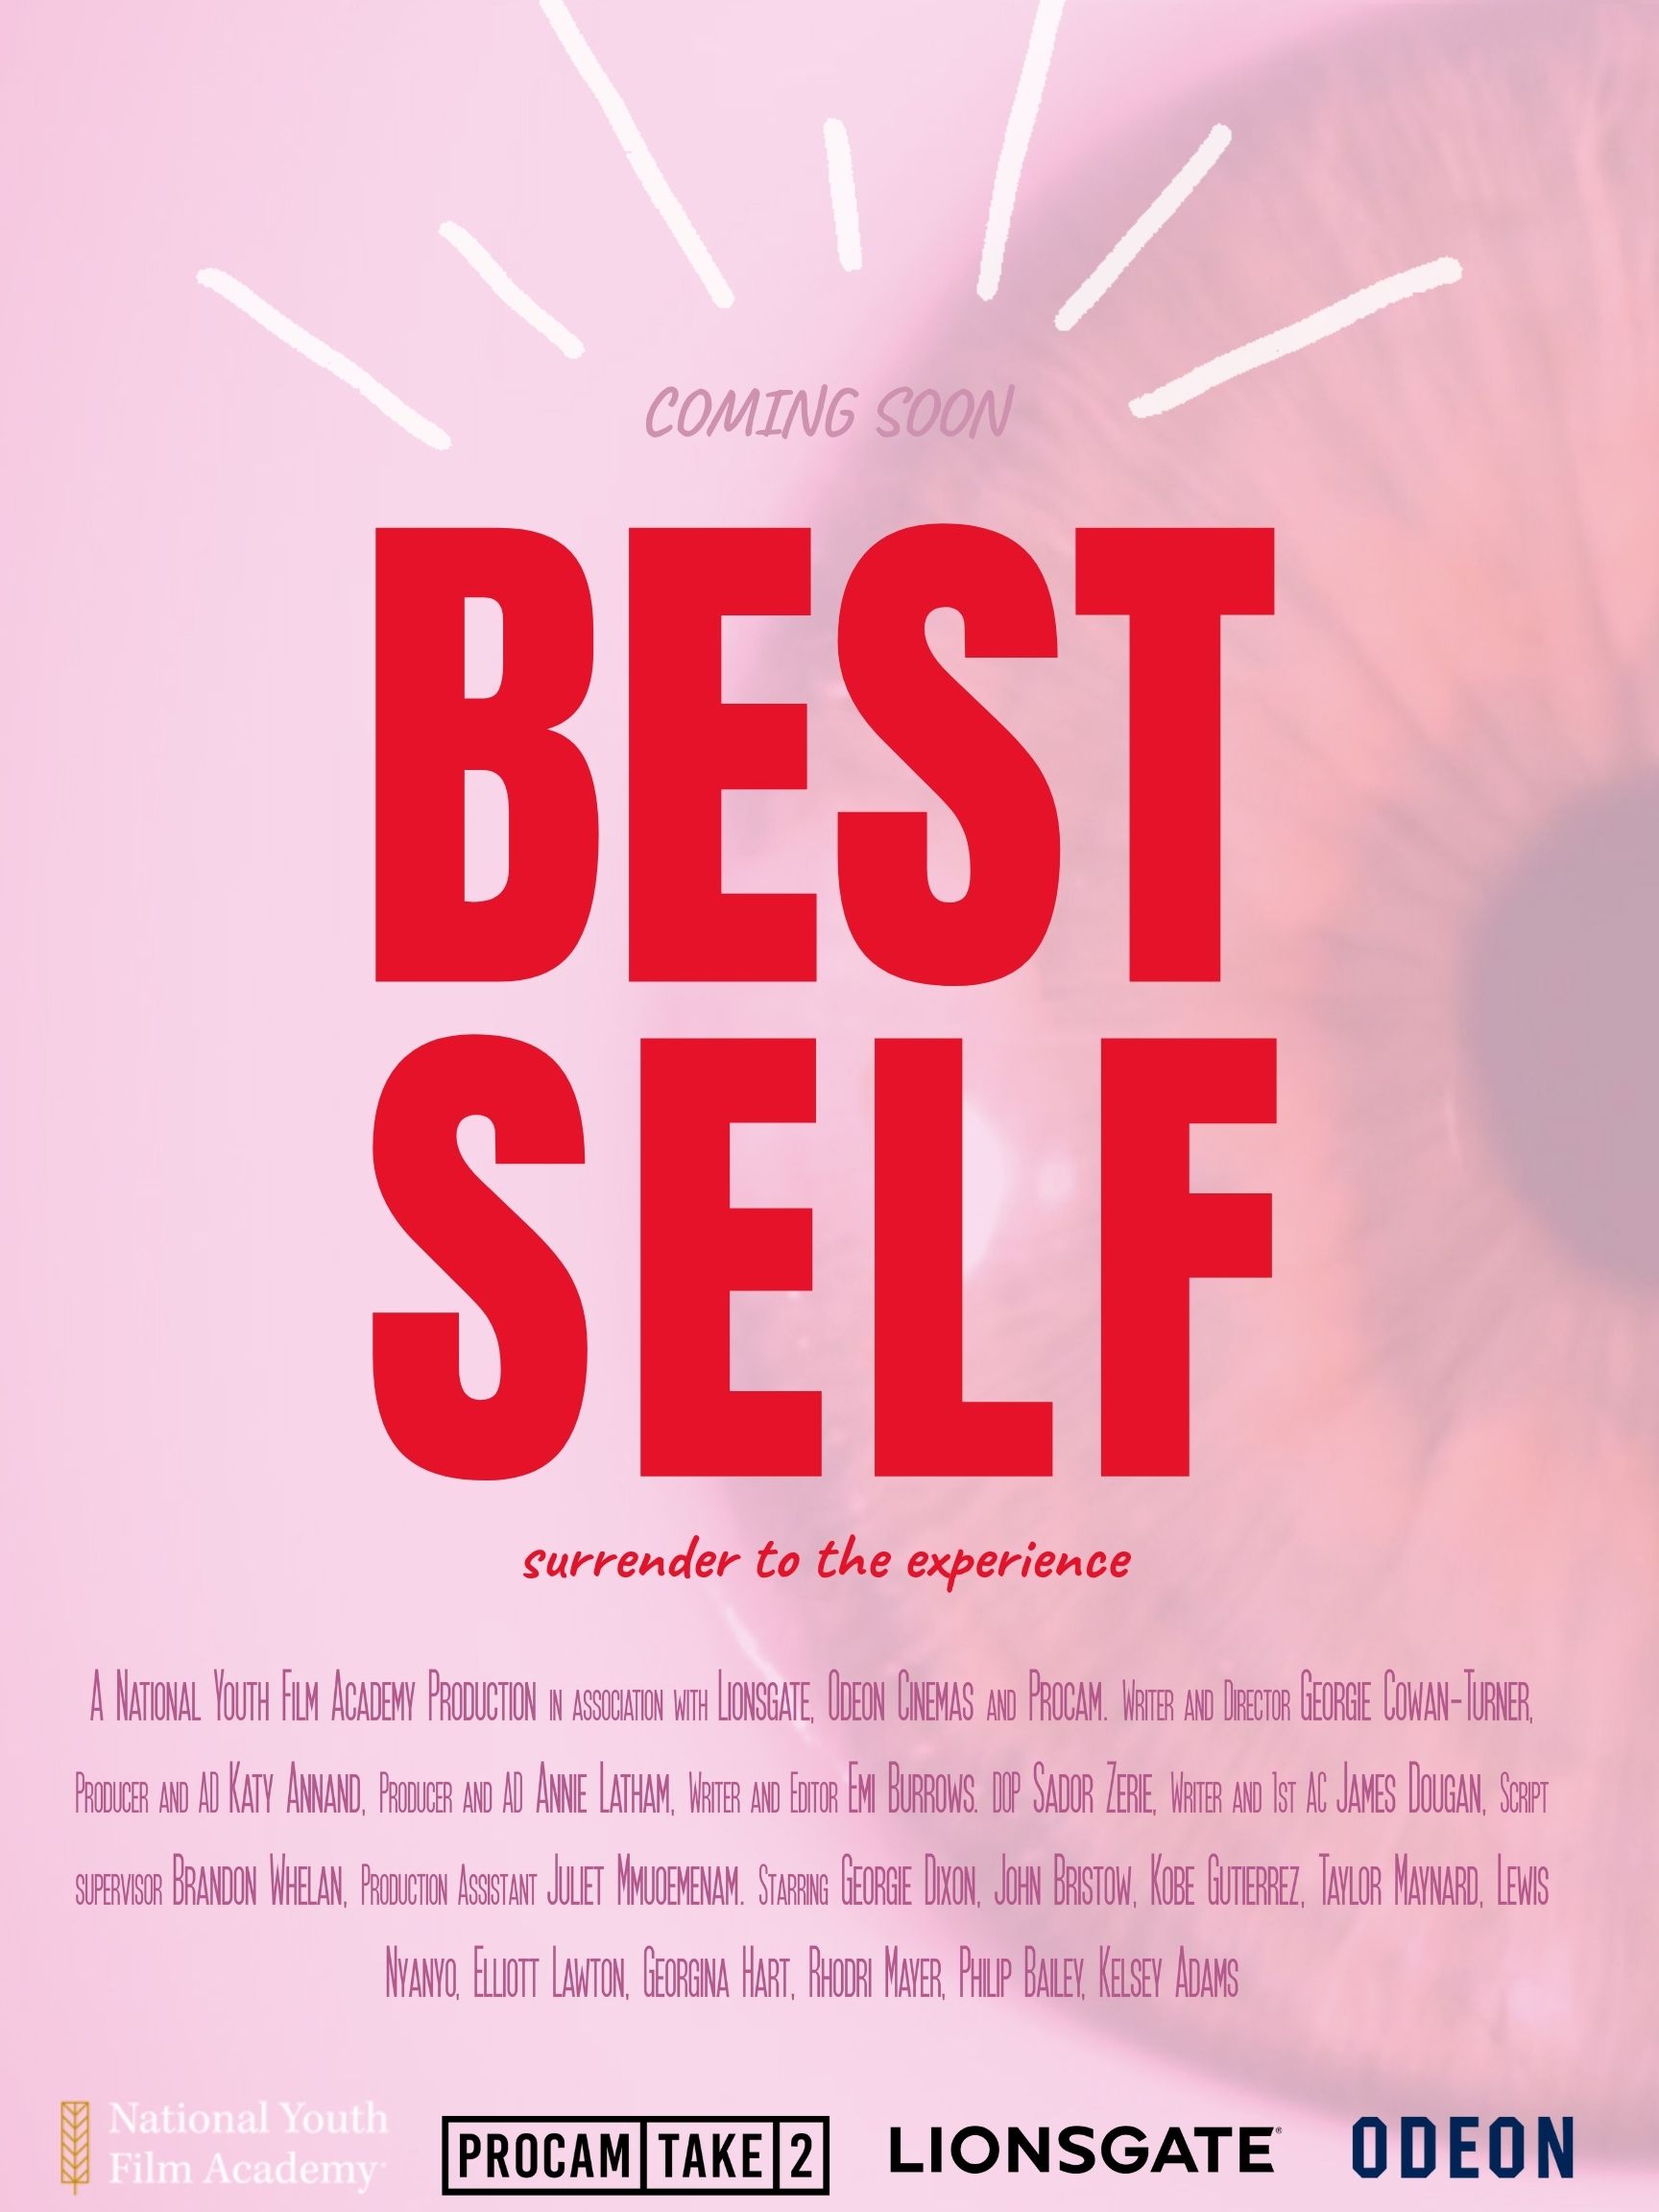 'Best Self' poster